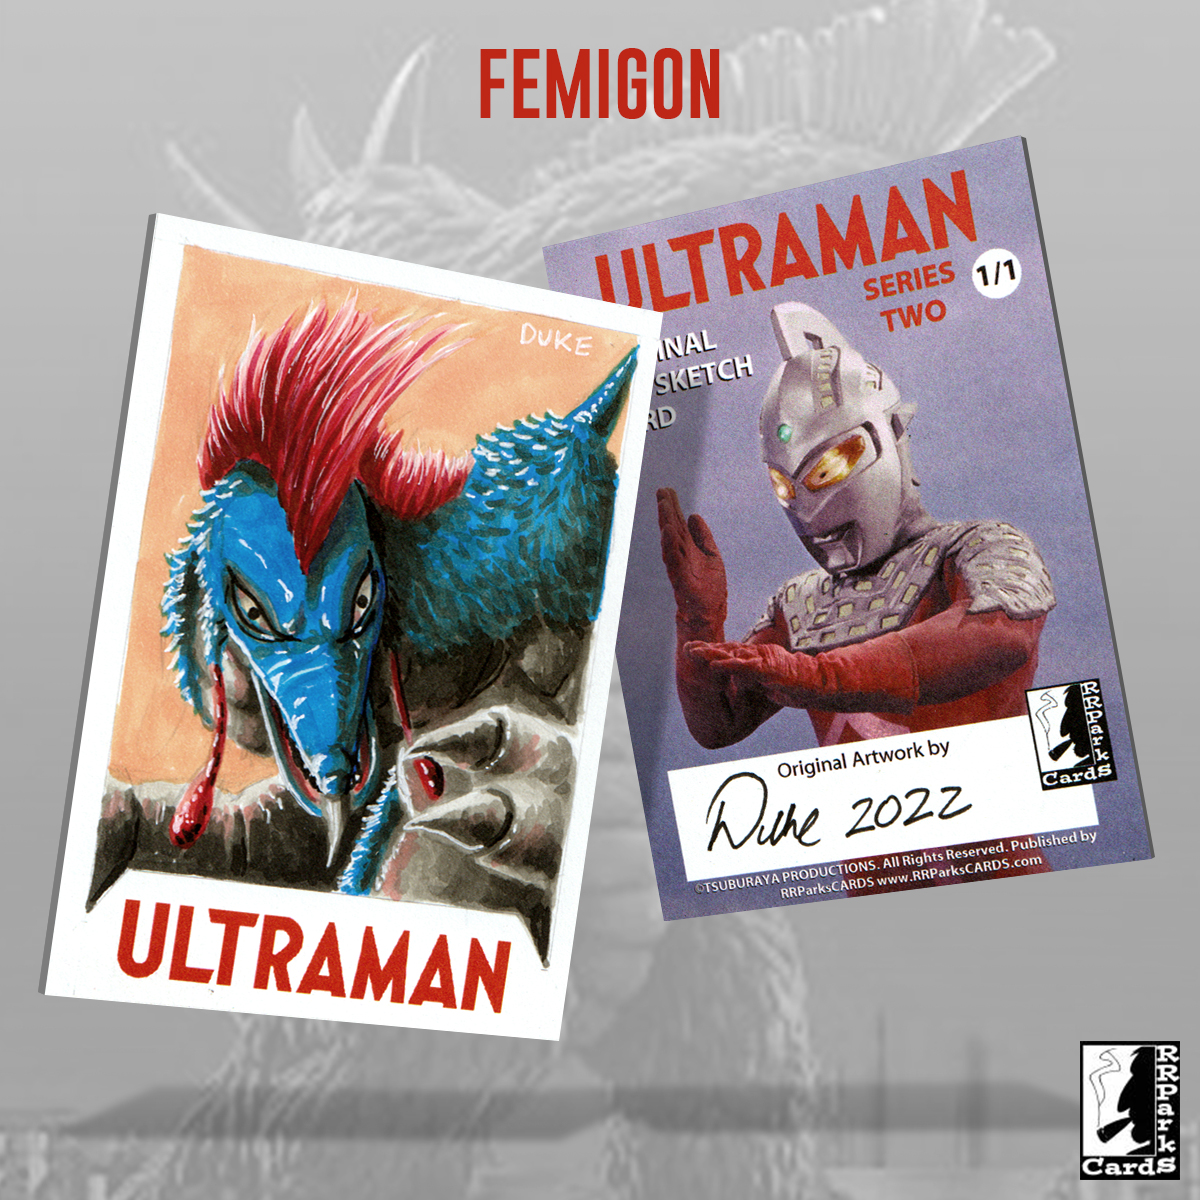 Ultraman Series 2 Femigon Sketch Card by Duke